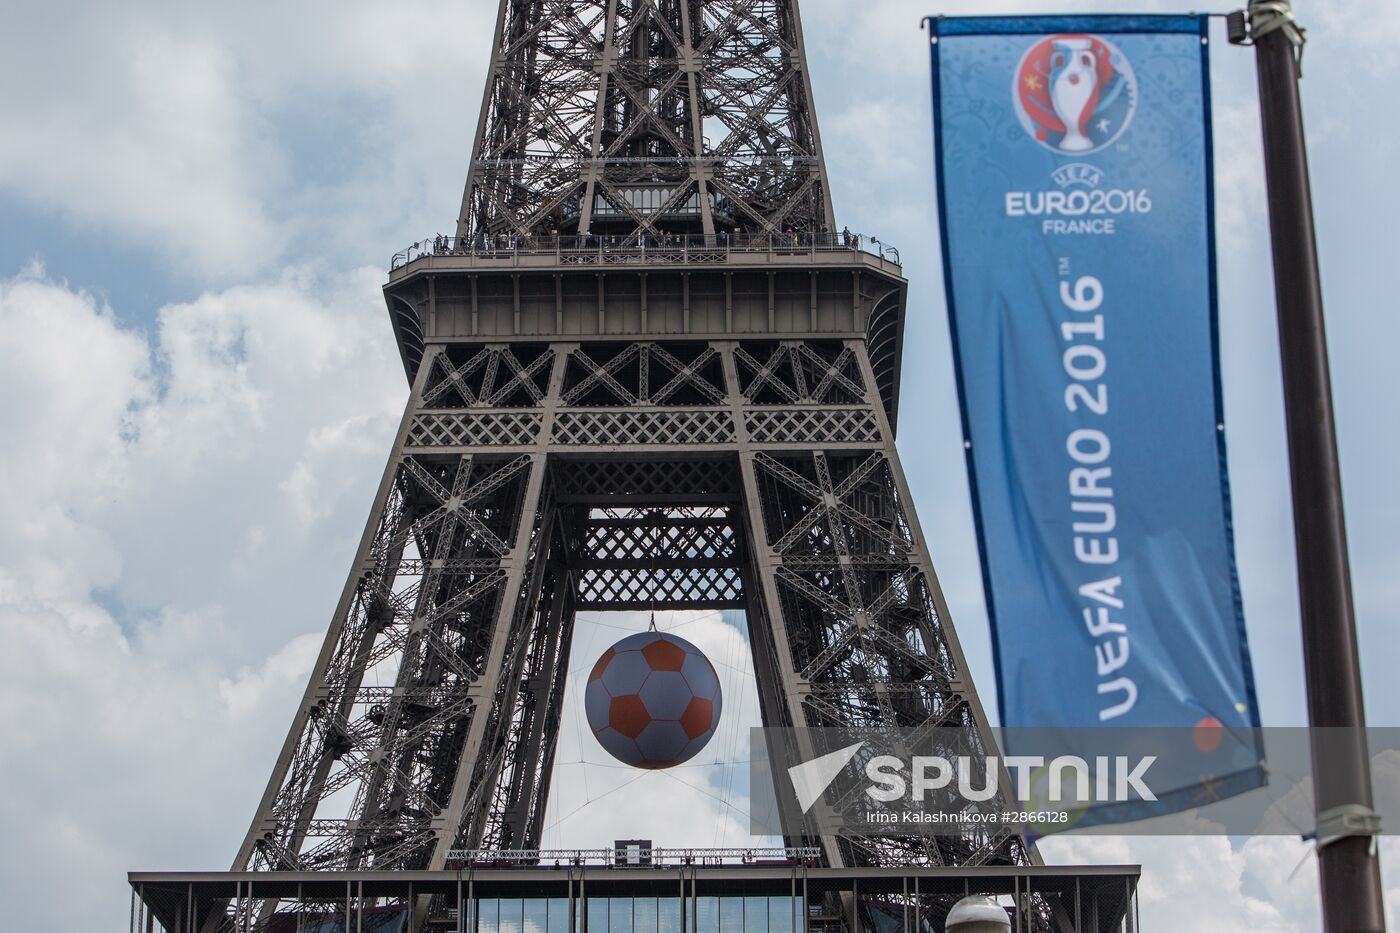 Preparations for UEFA Euro 2016 in Paris